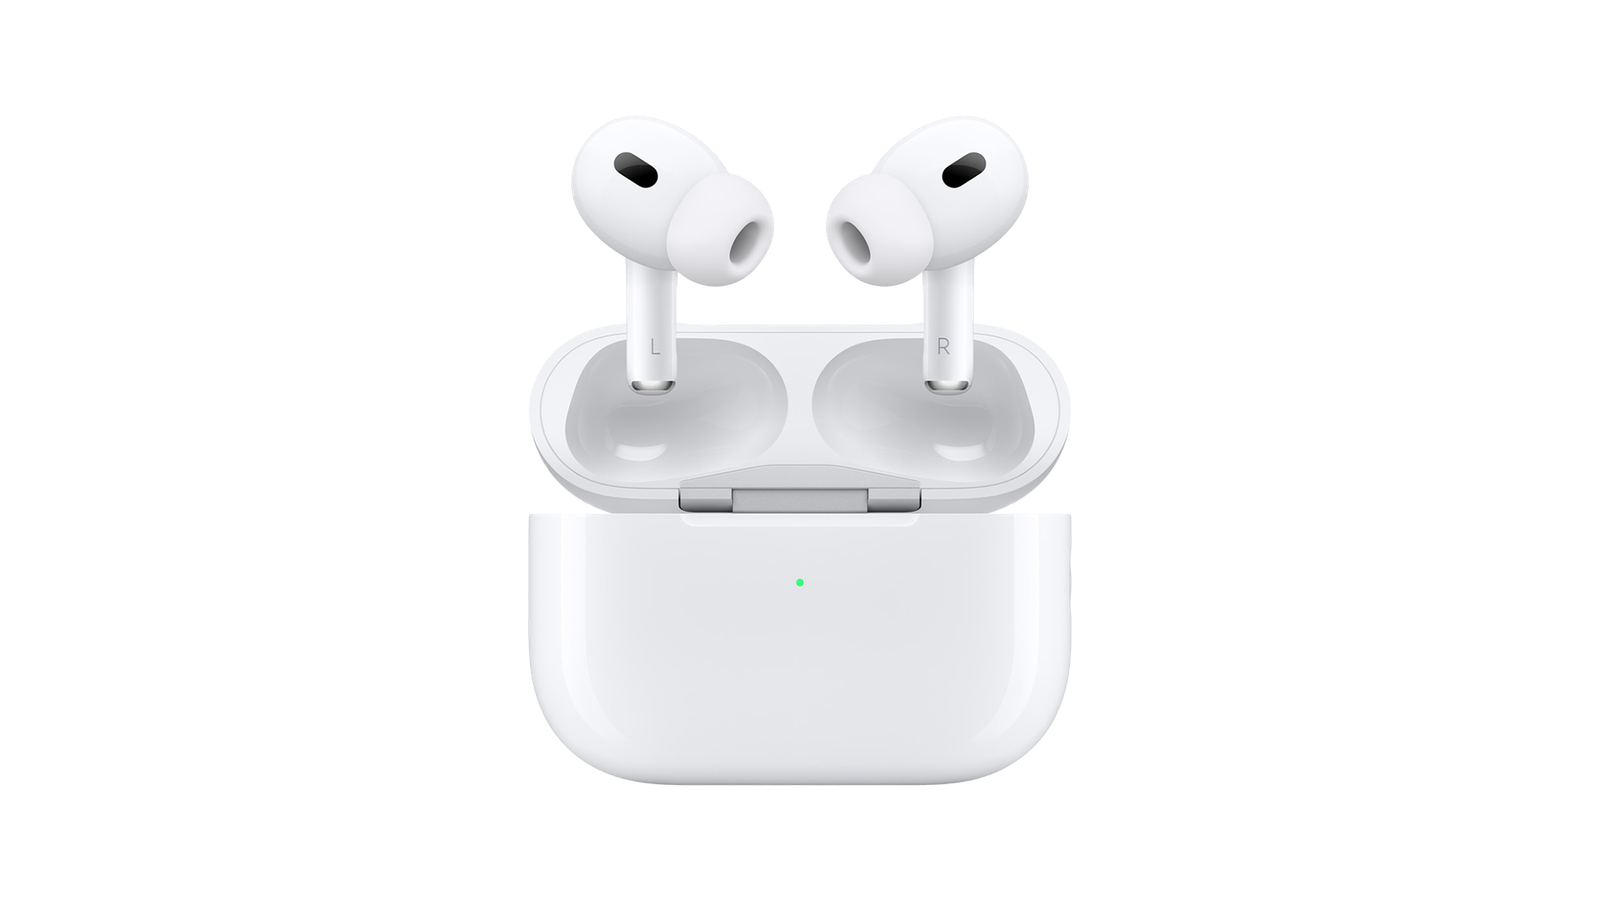 Apple AirPods Pro (2nd Generation) - Best Premium Wireless Earbuds